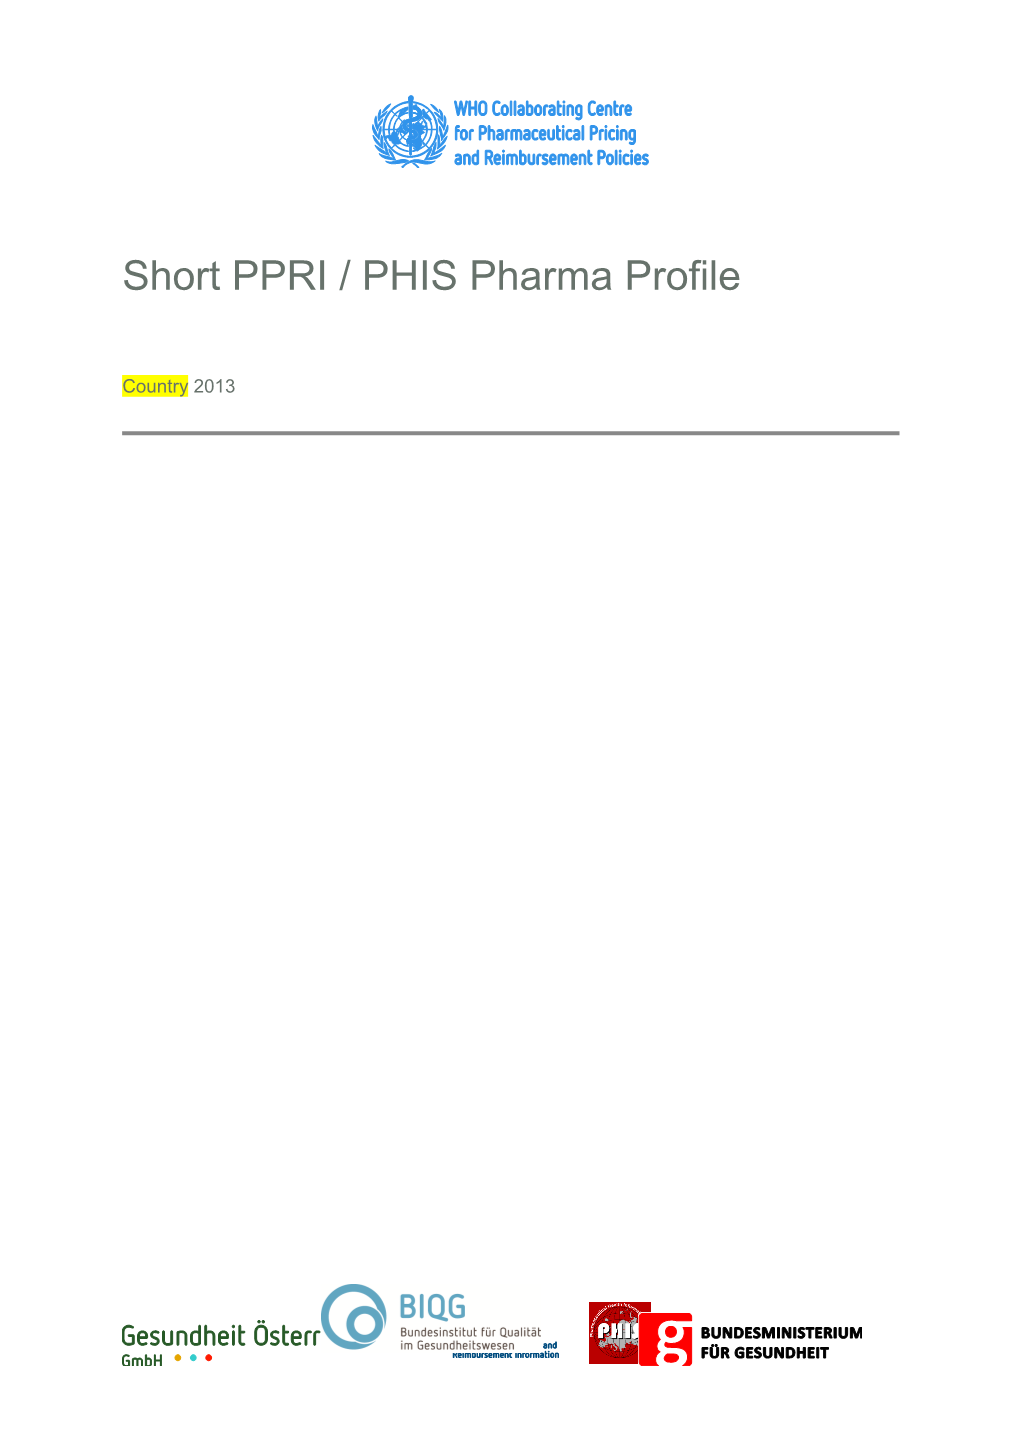 Short PPRI/PHIS Pharma Profile 2013